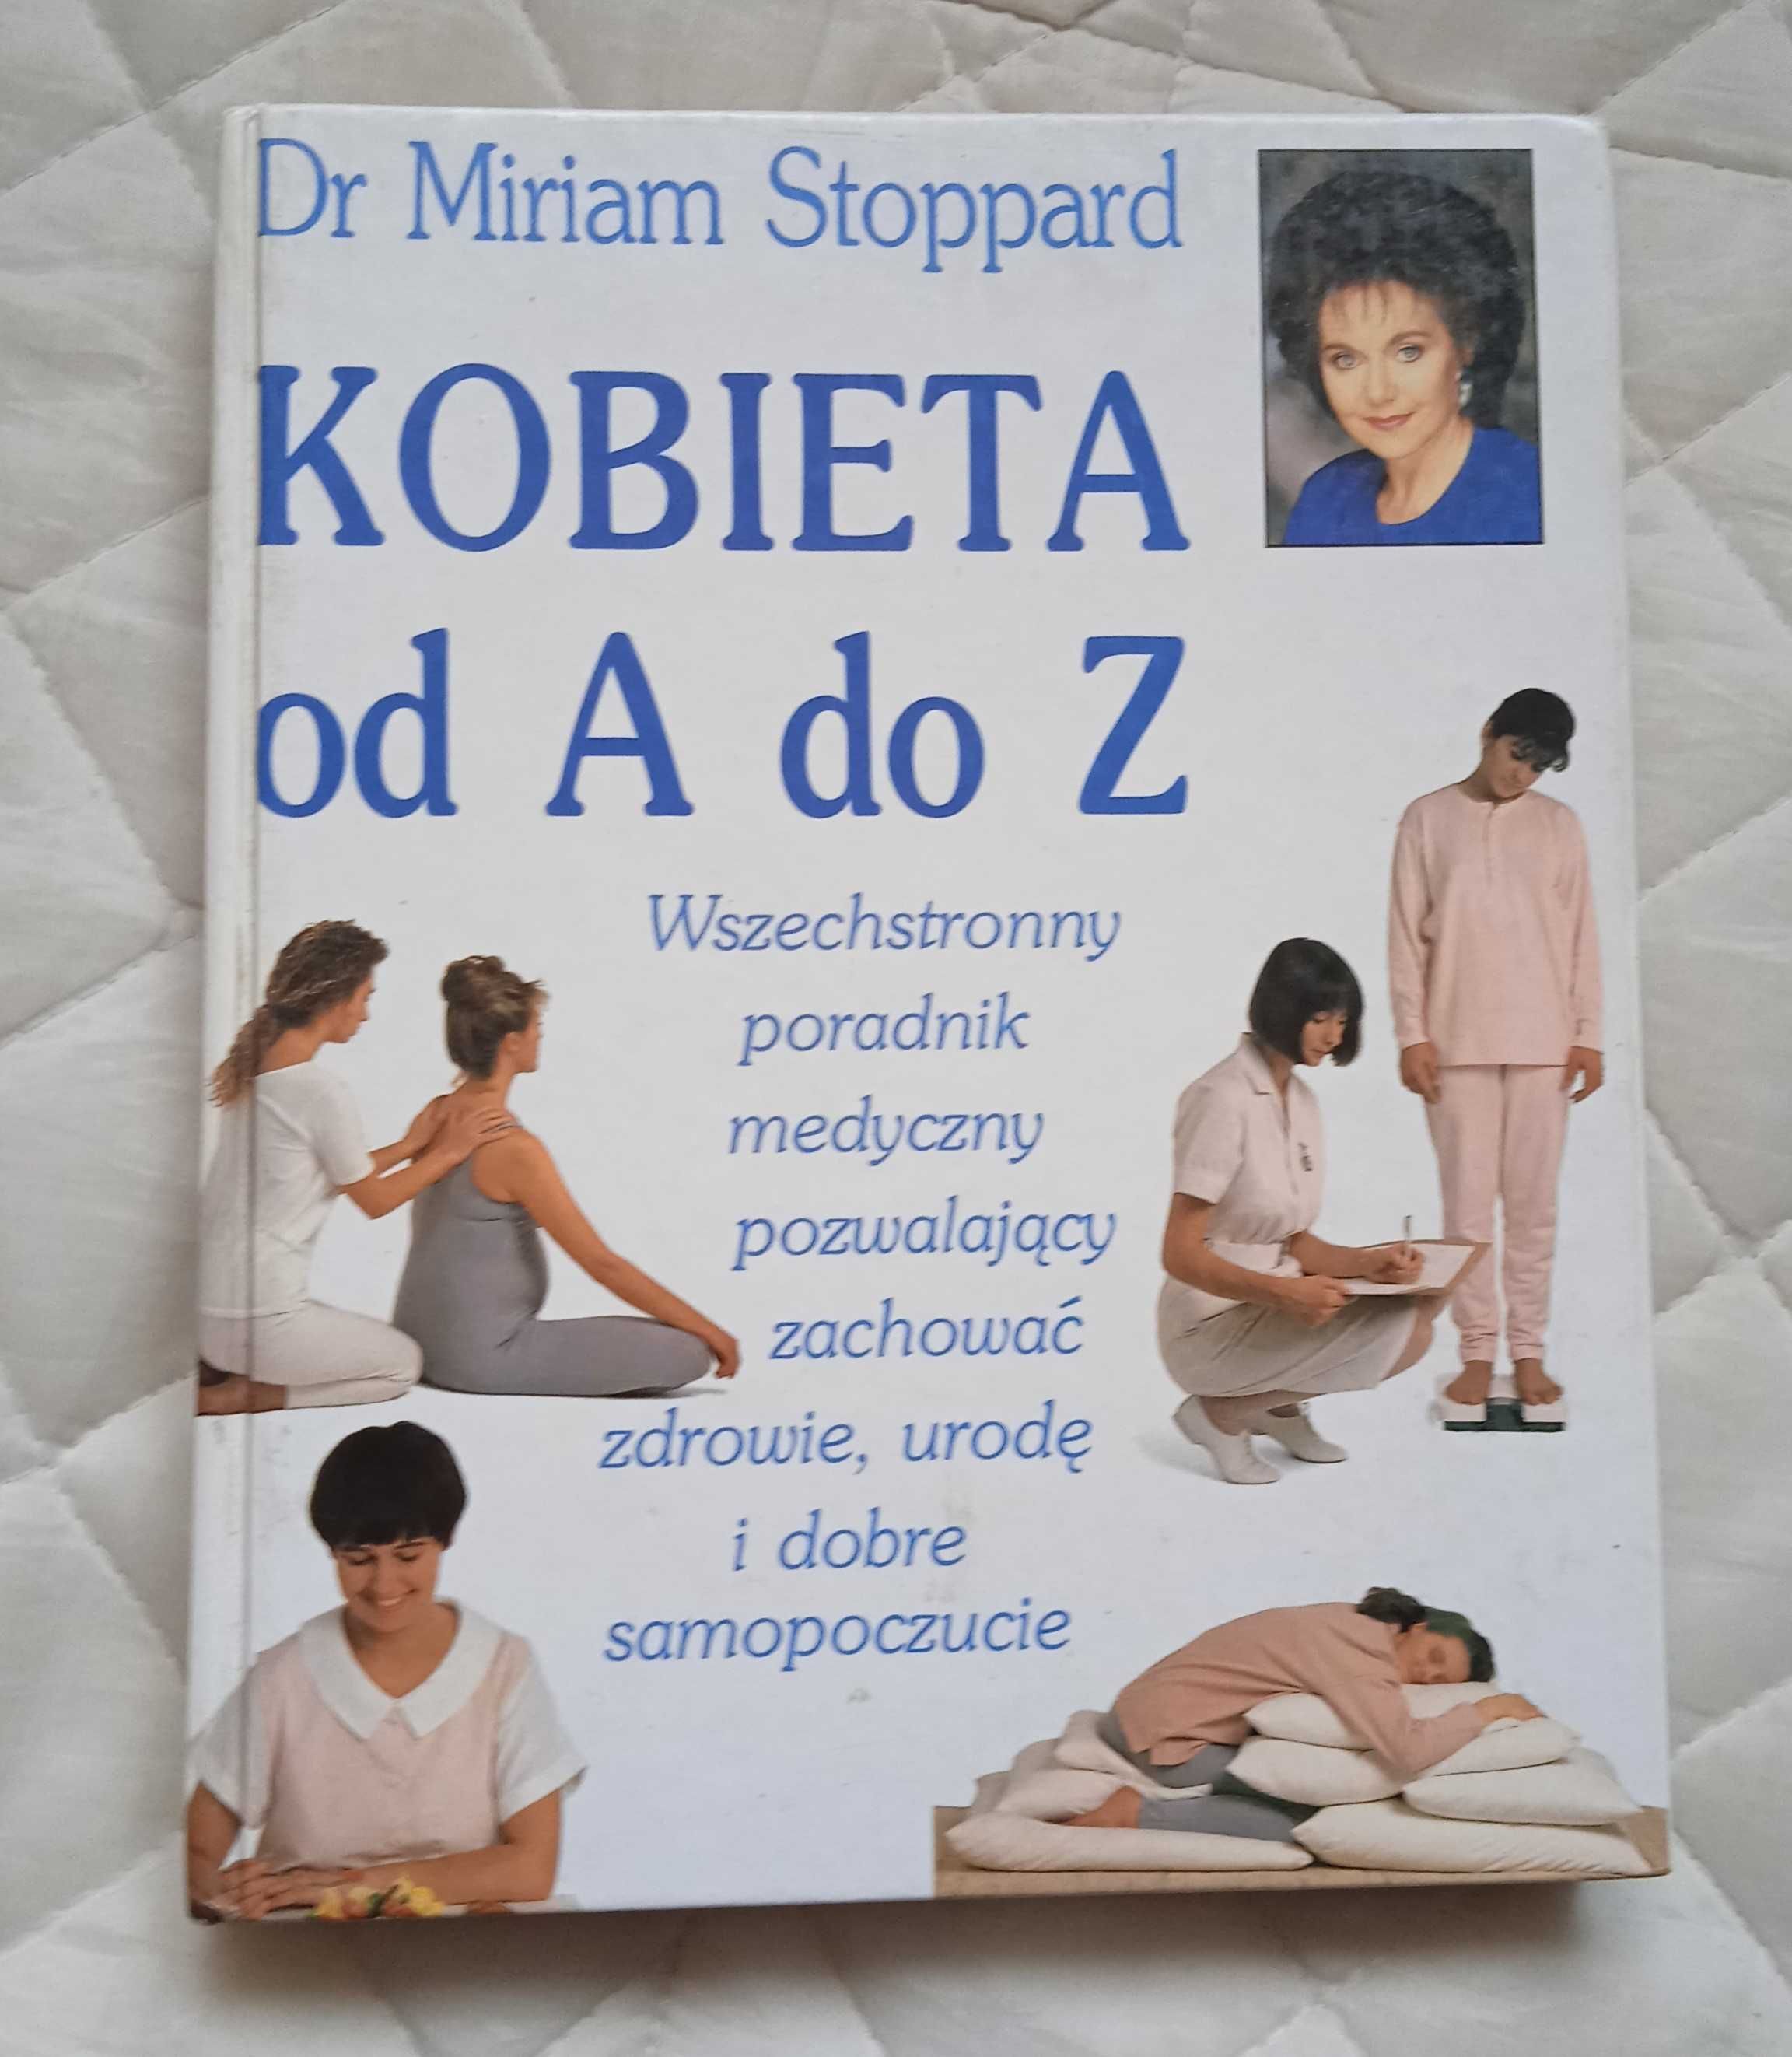 Kobieta od A do Z  - Dr Miriam Stoppard